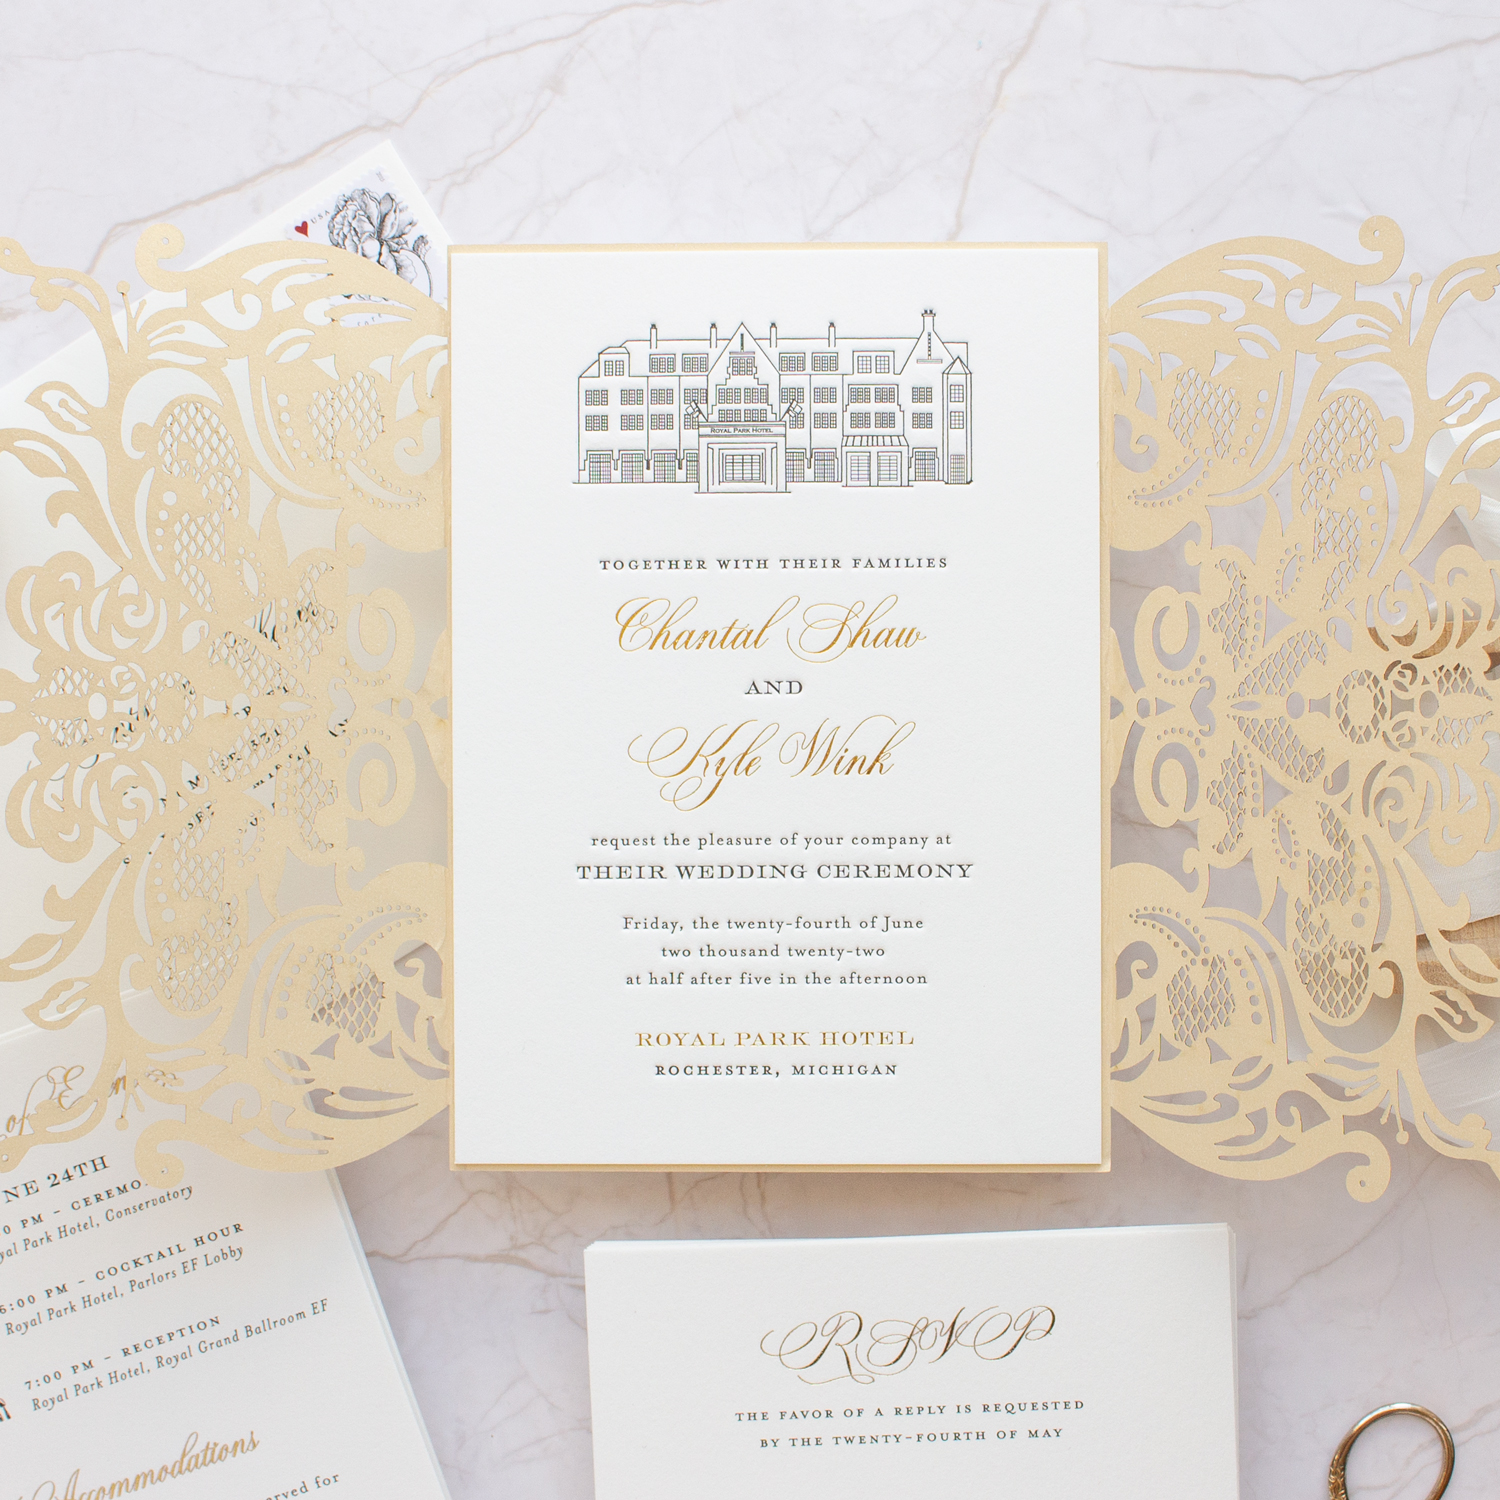 Royal Park Hotel wedding invitations with laser cut